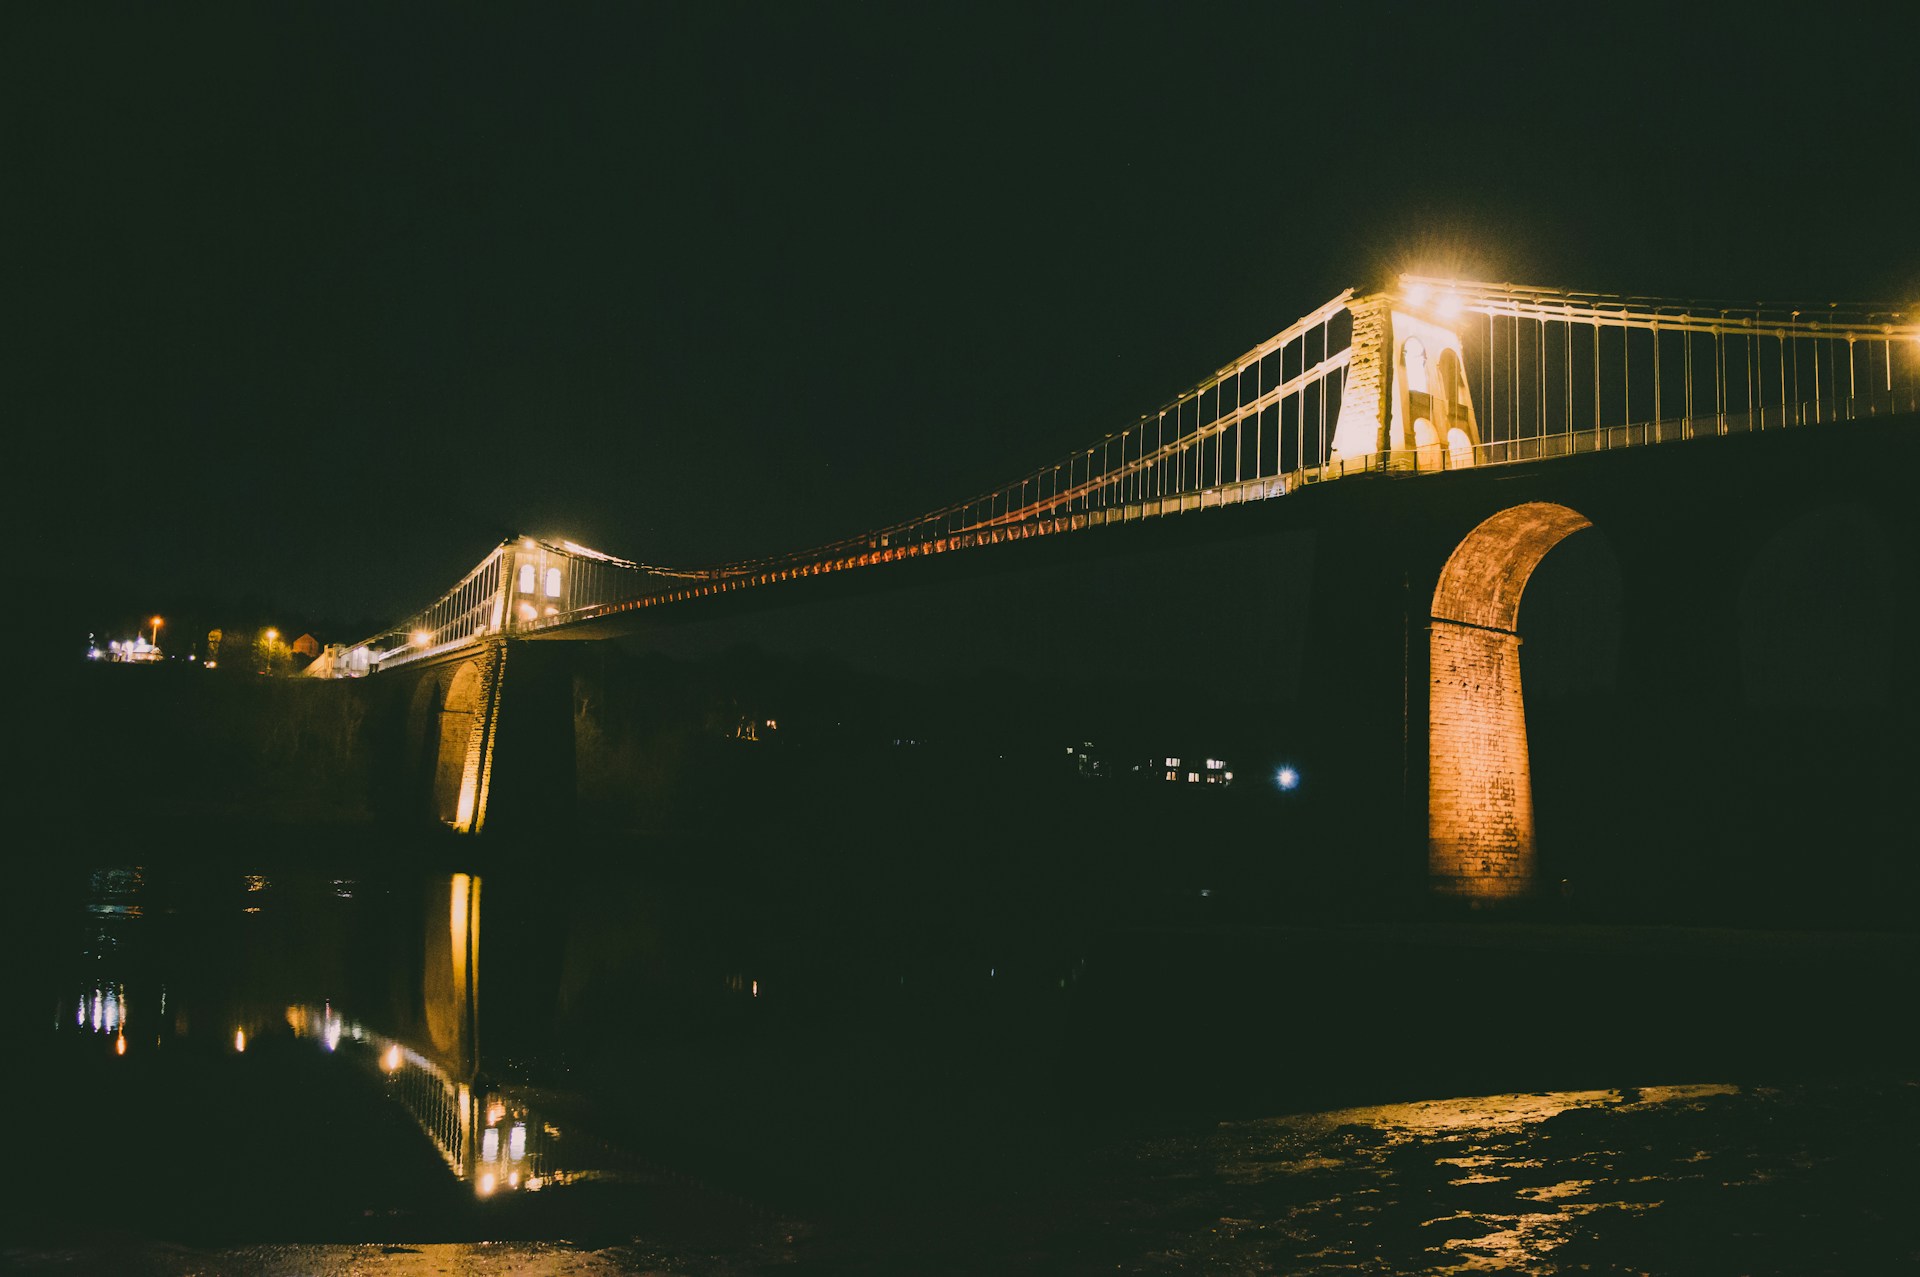 A suspension bridge lit up at night